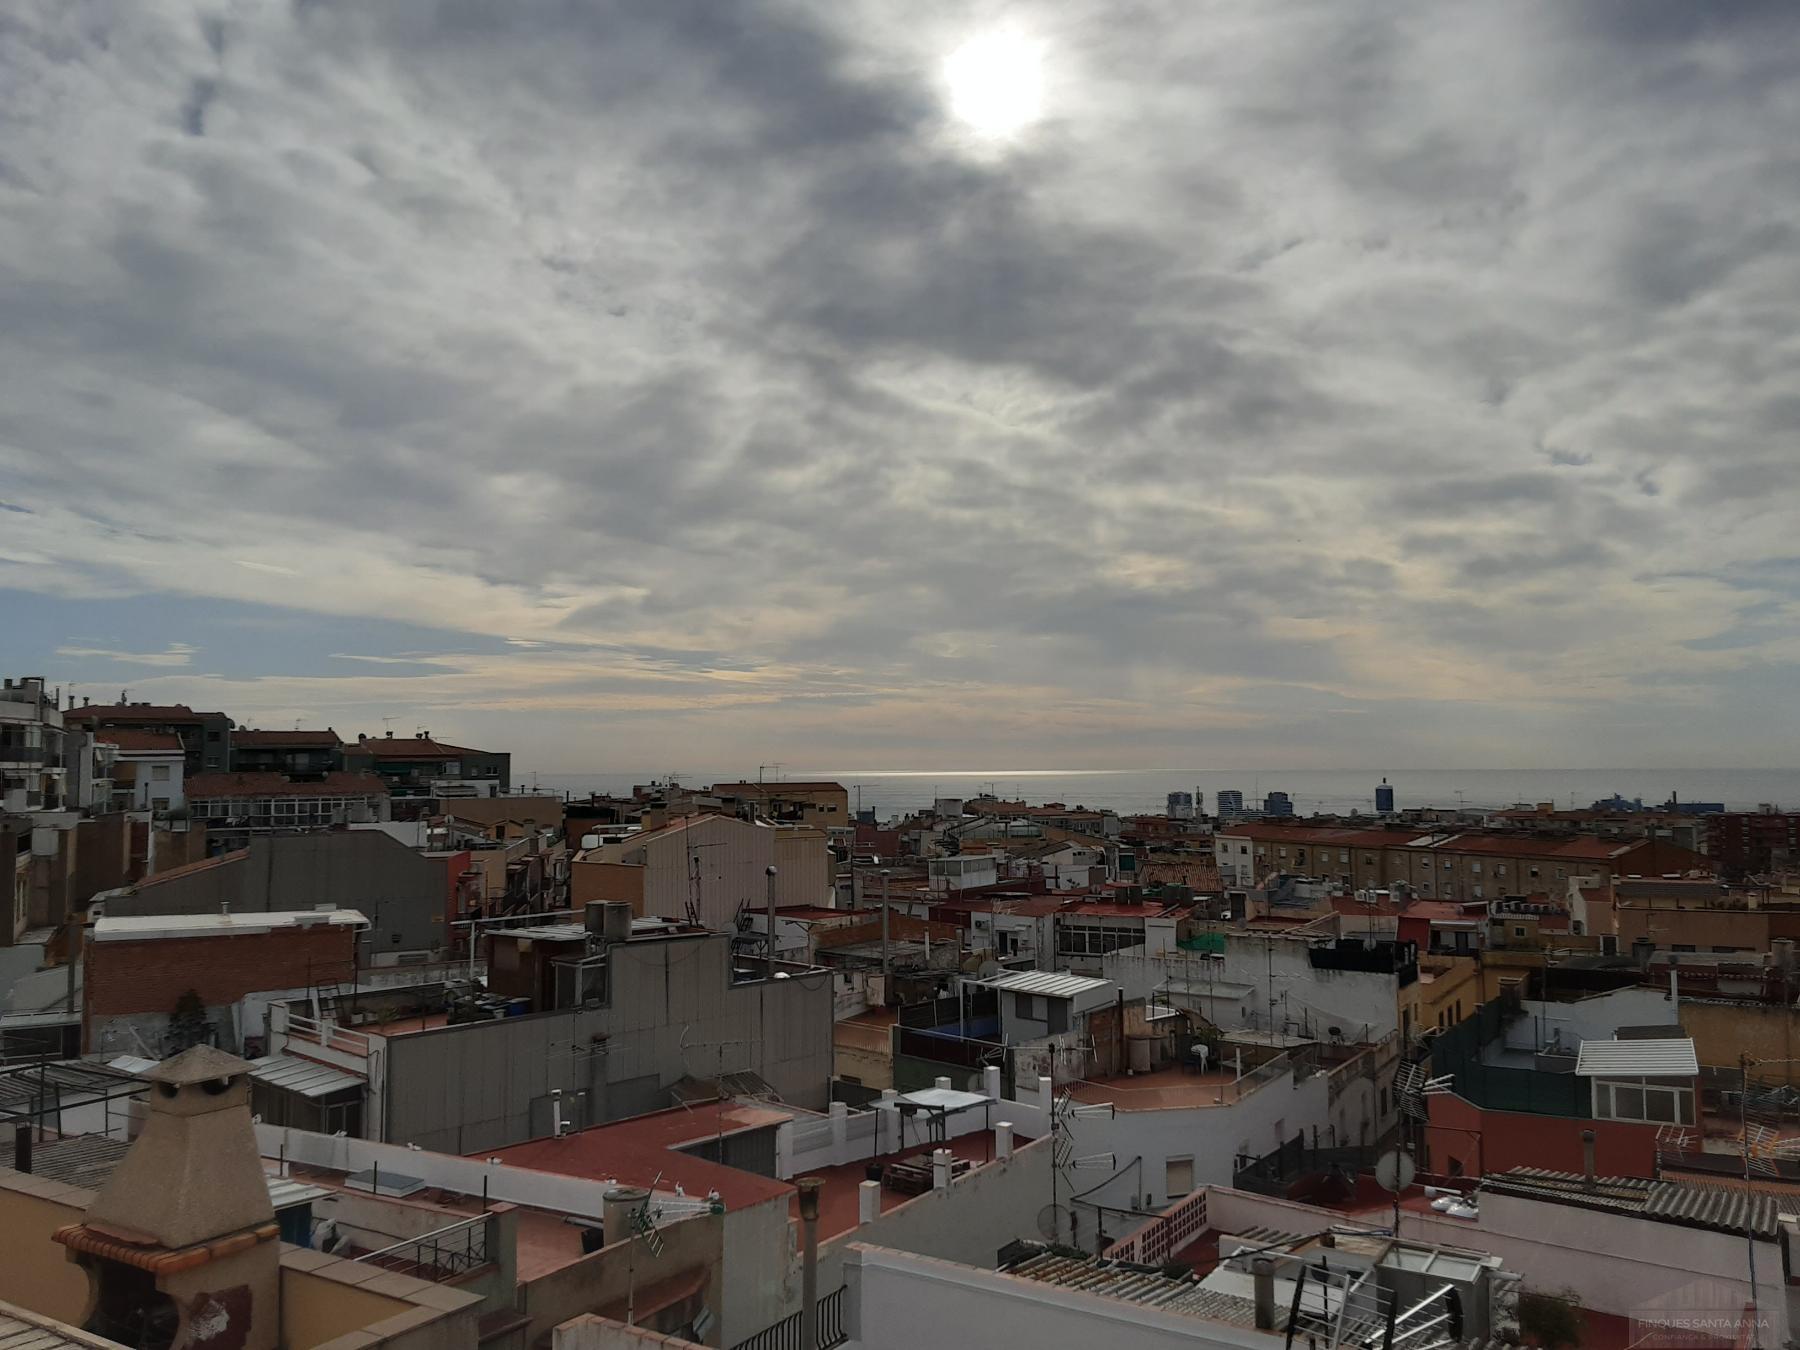 Venta de dúplex en Mataró